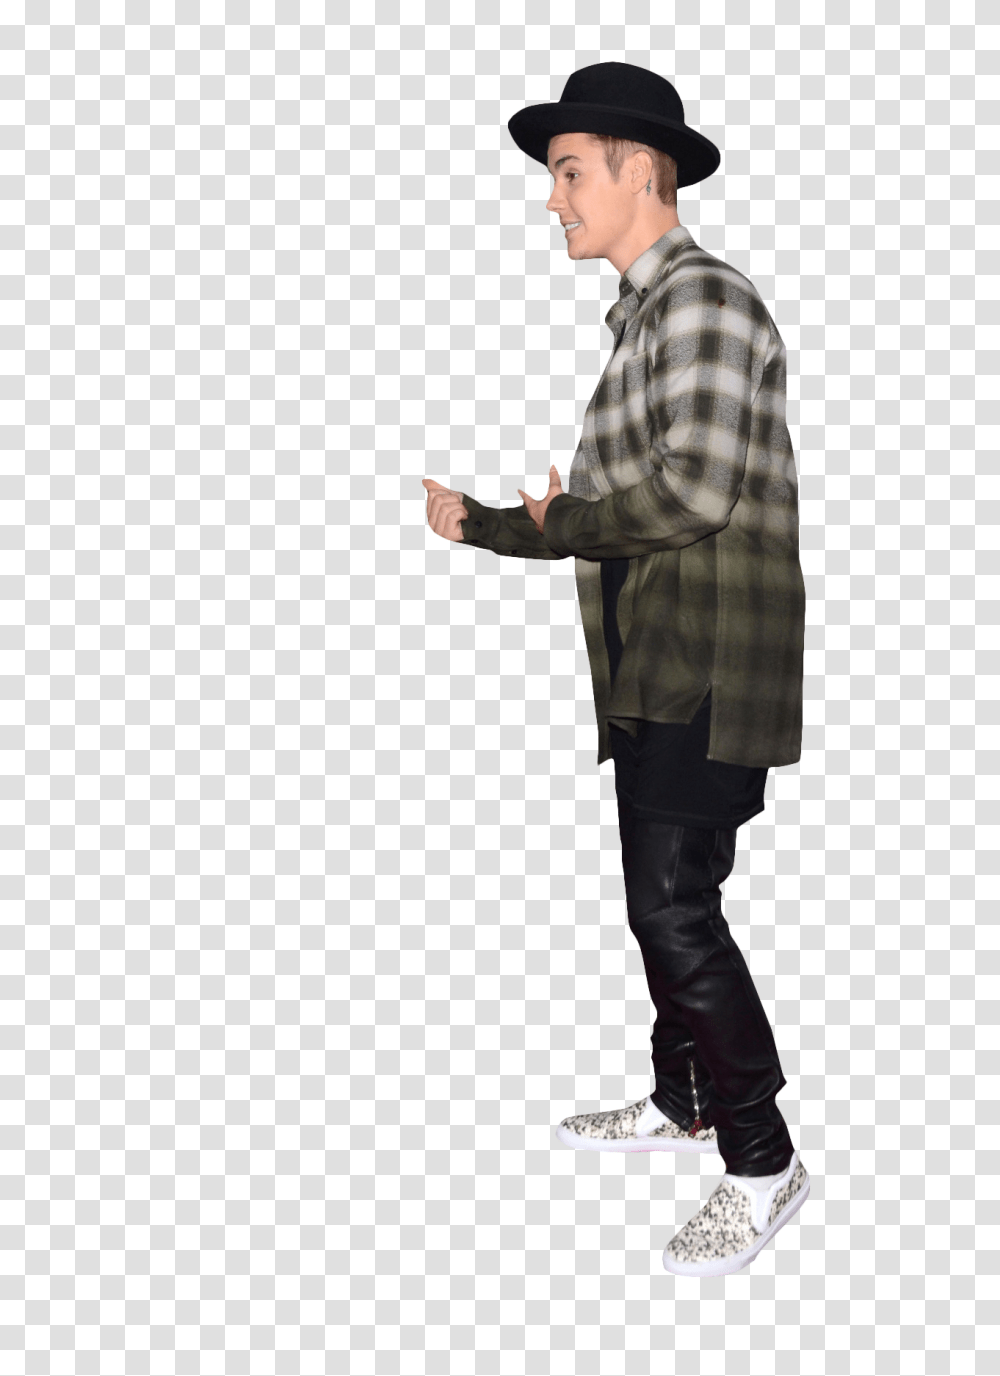 Pin Von Julian Auf Justin Bieber In Justin, Person, Hat, Shoe Transparent Png